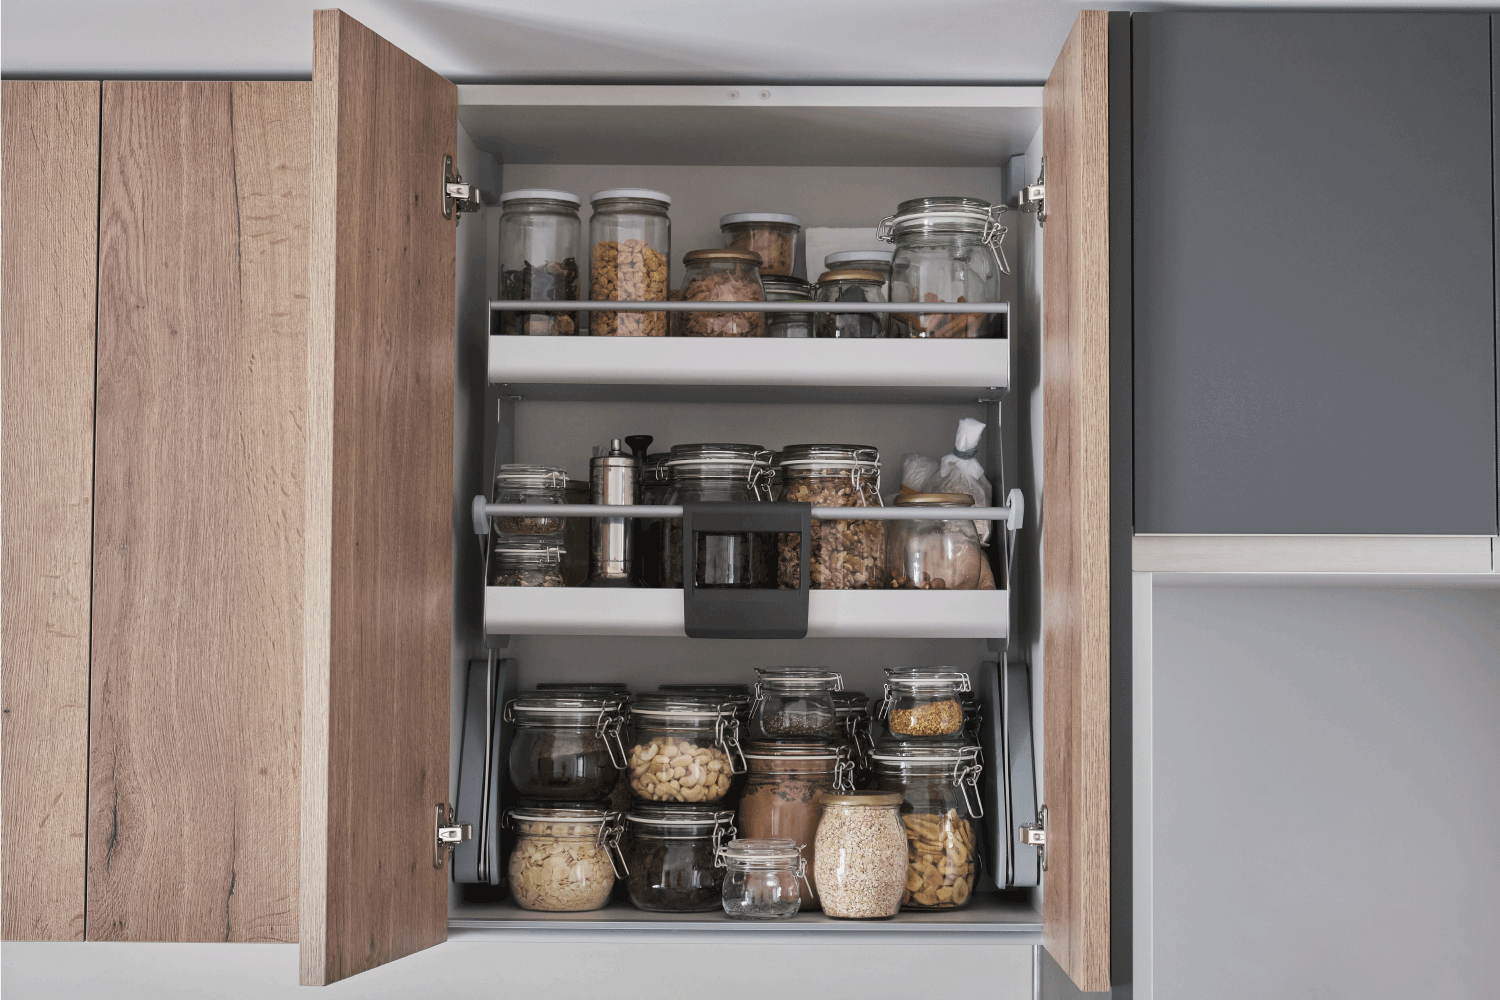 Variety of dry foods, grains, nuts, cereals in glass jars in kitchen cupboard. Zero waste storage concept.